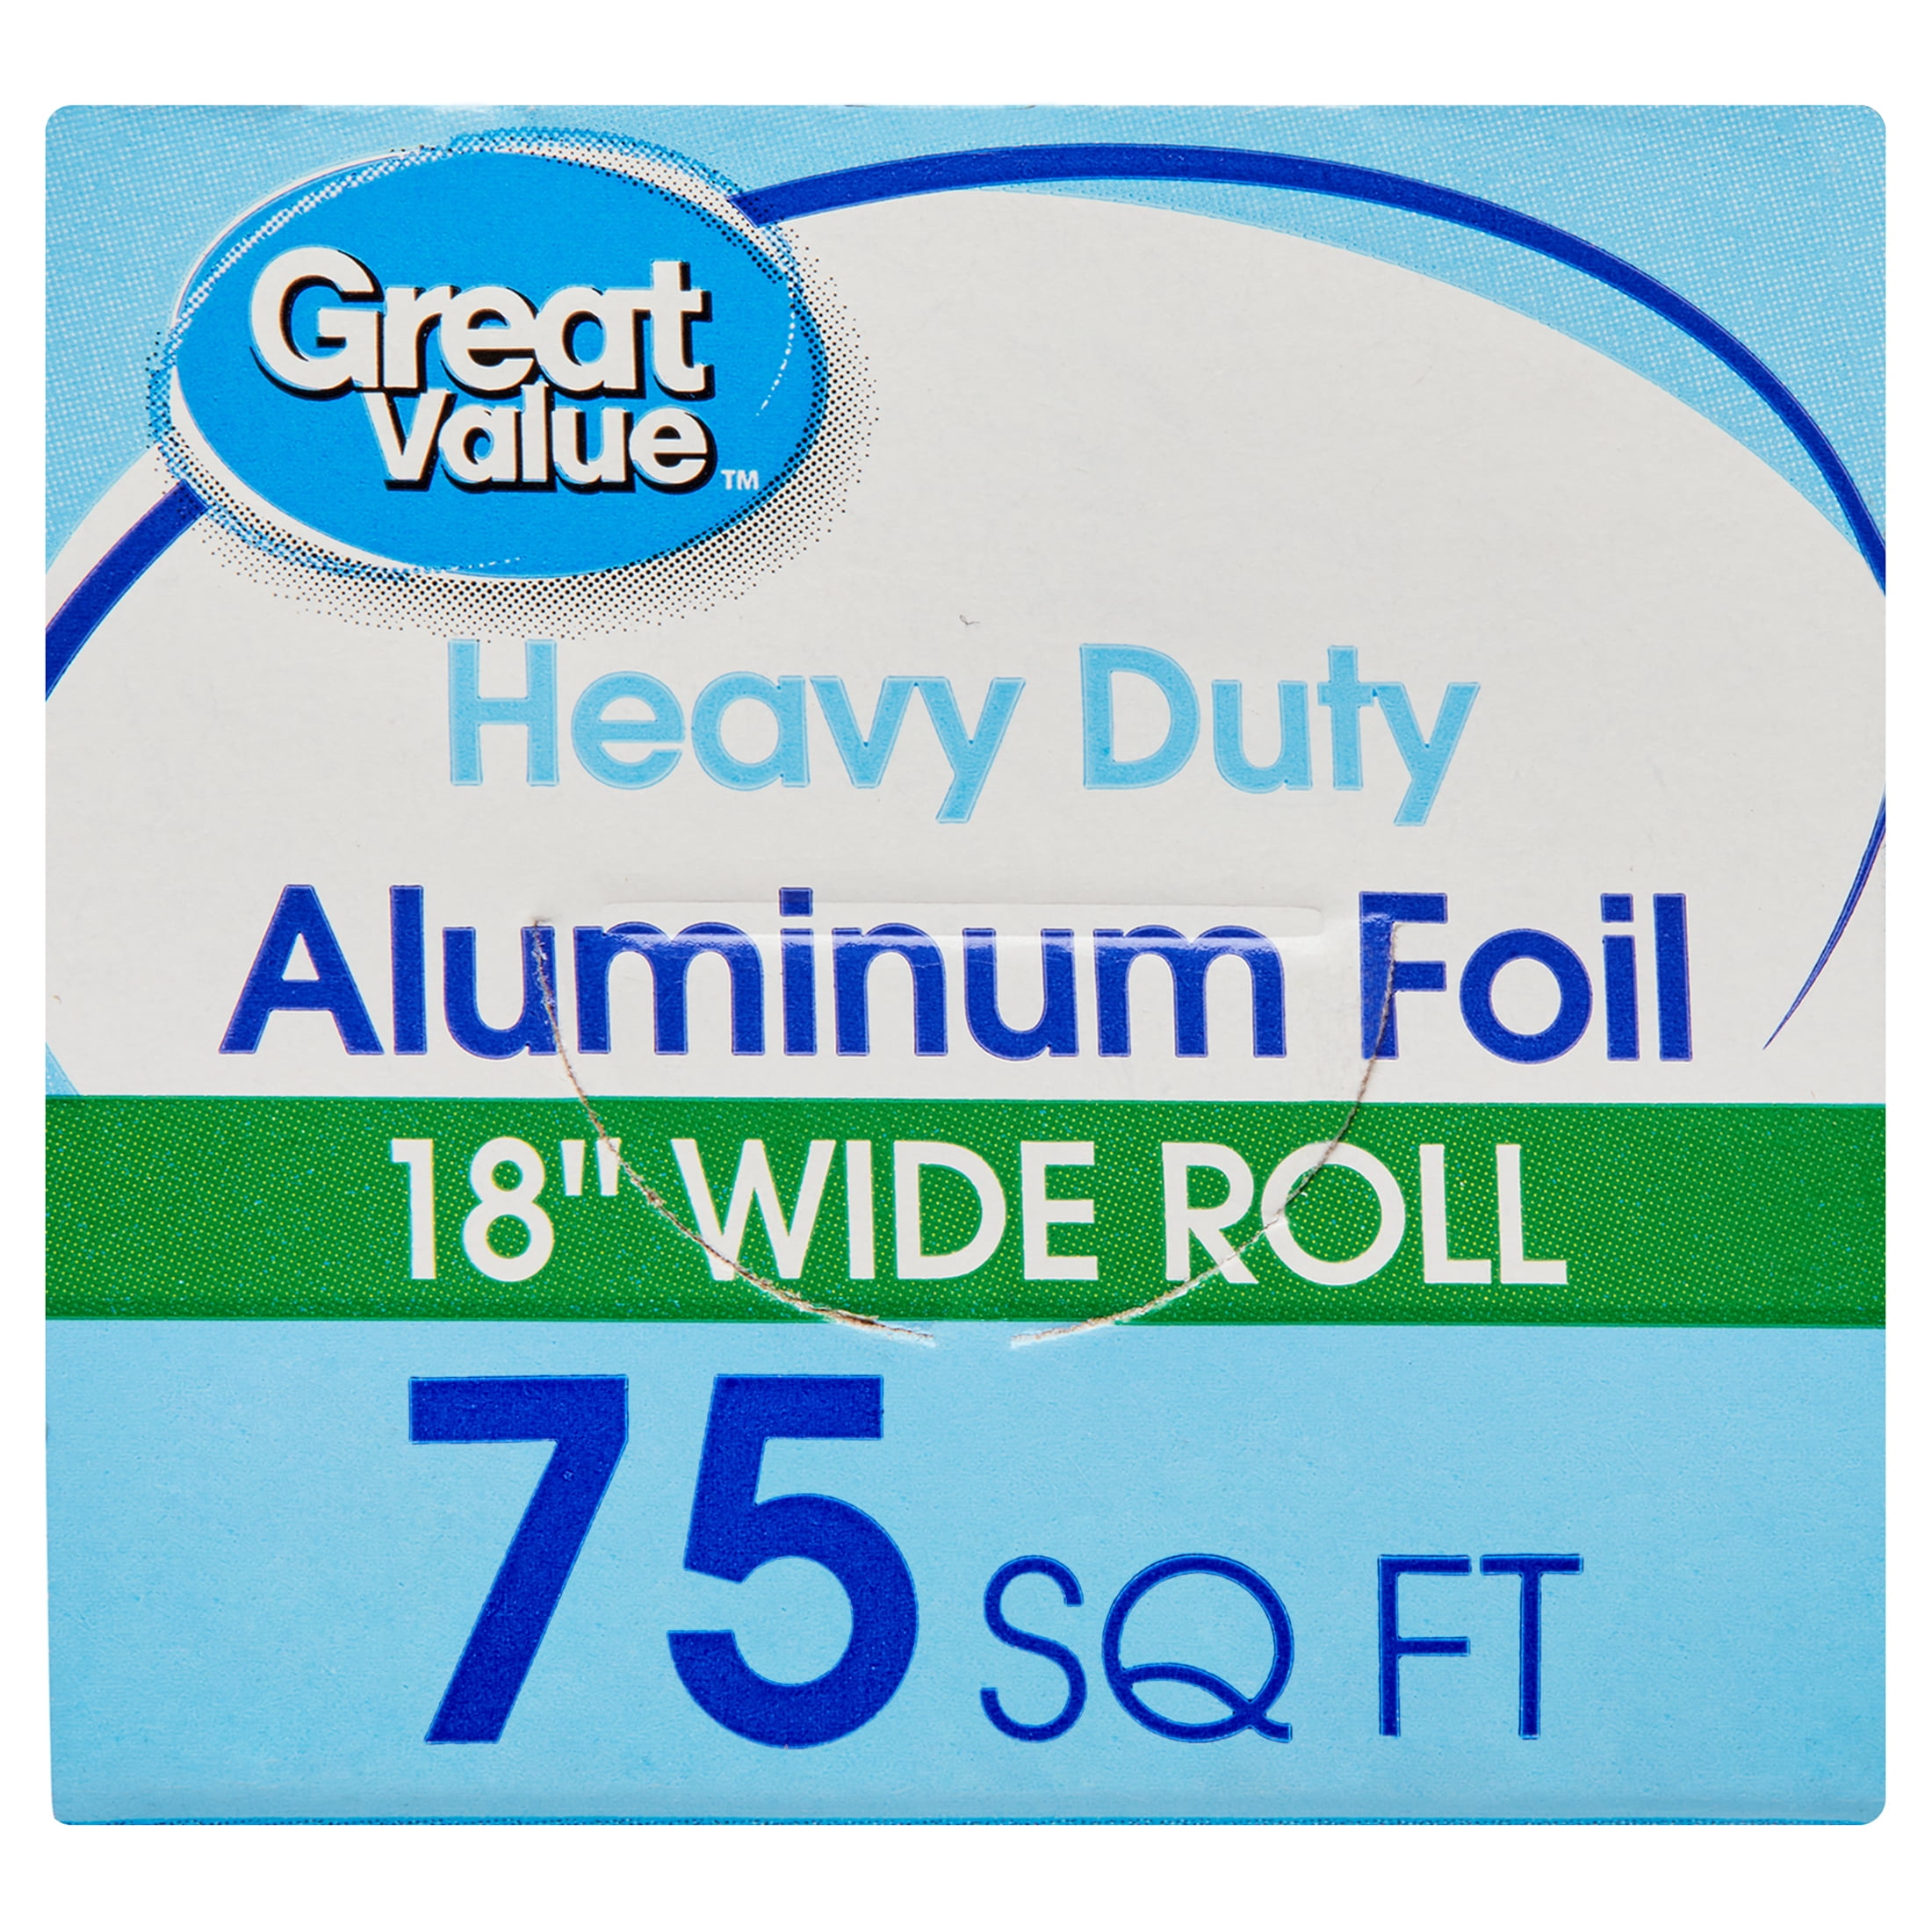 Great Value Heavy Duty Aluminum Foil, 75 sq ft 